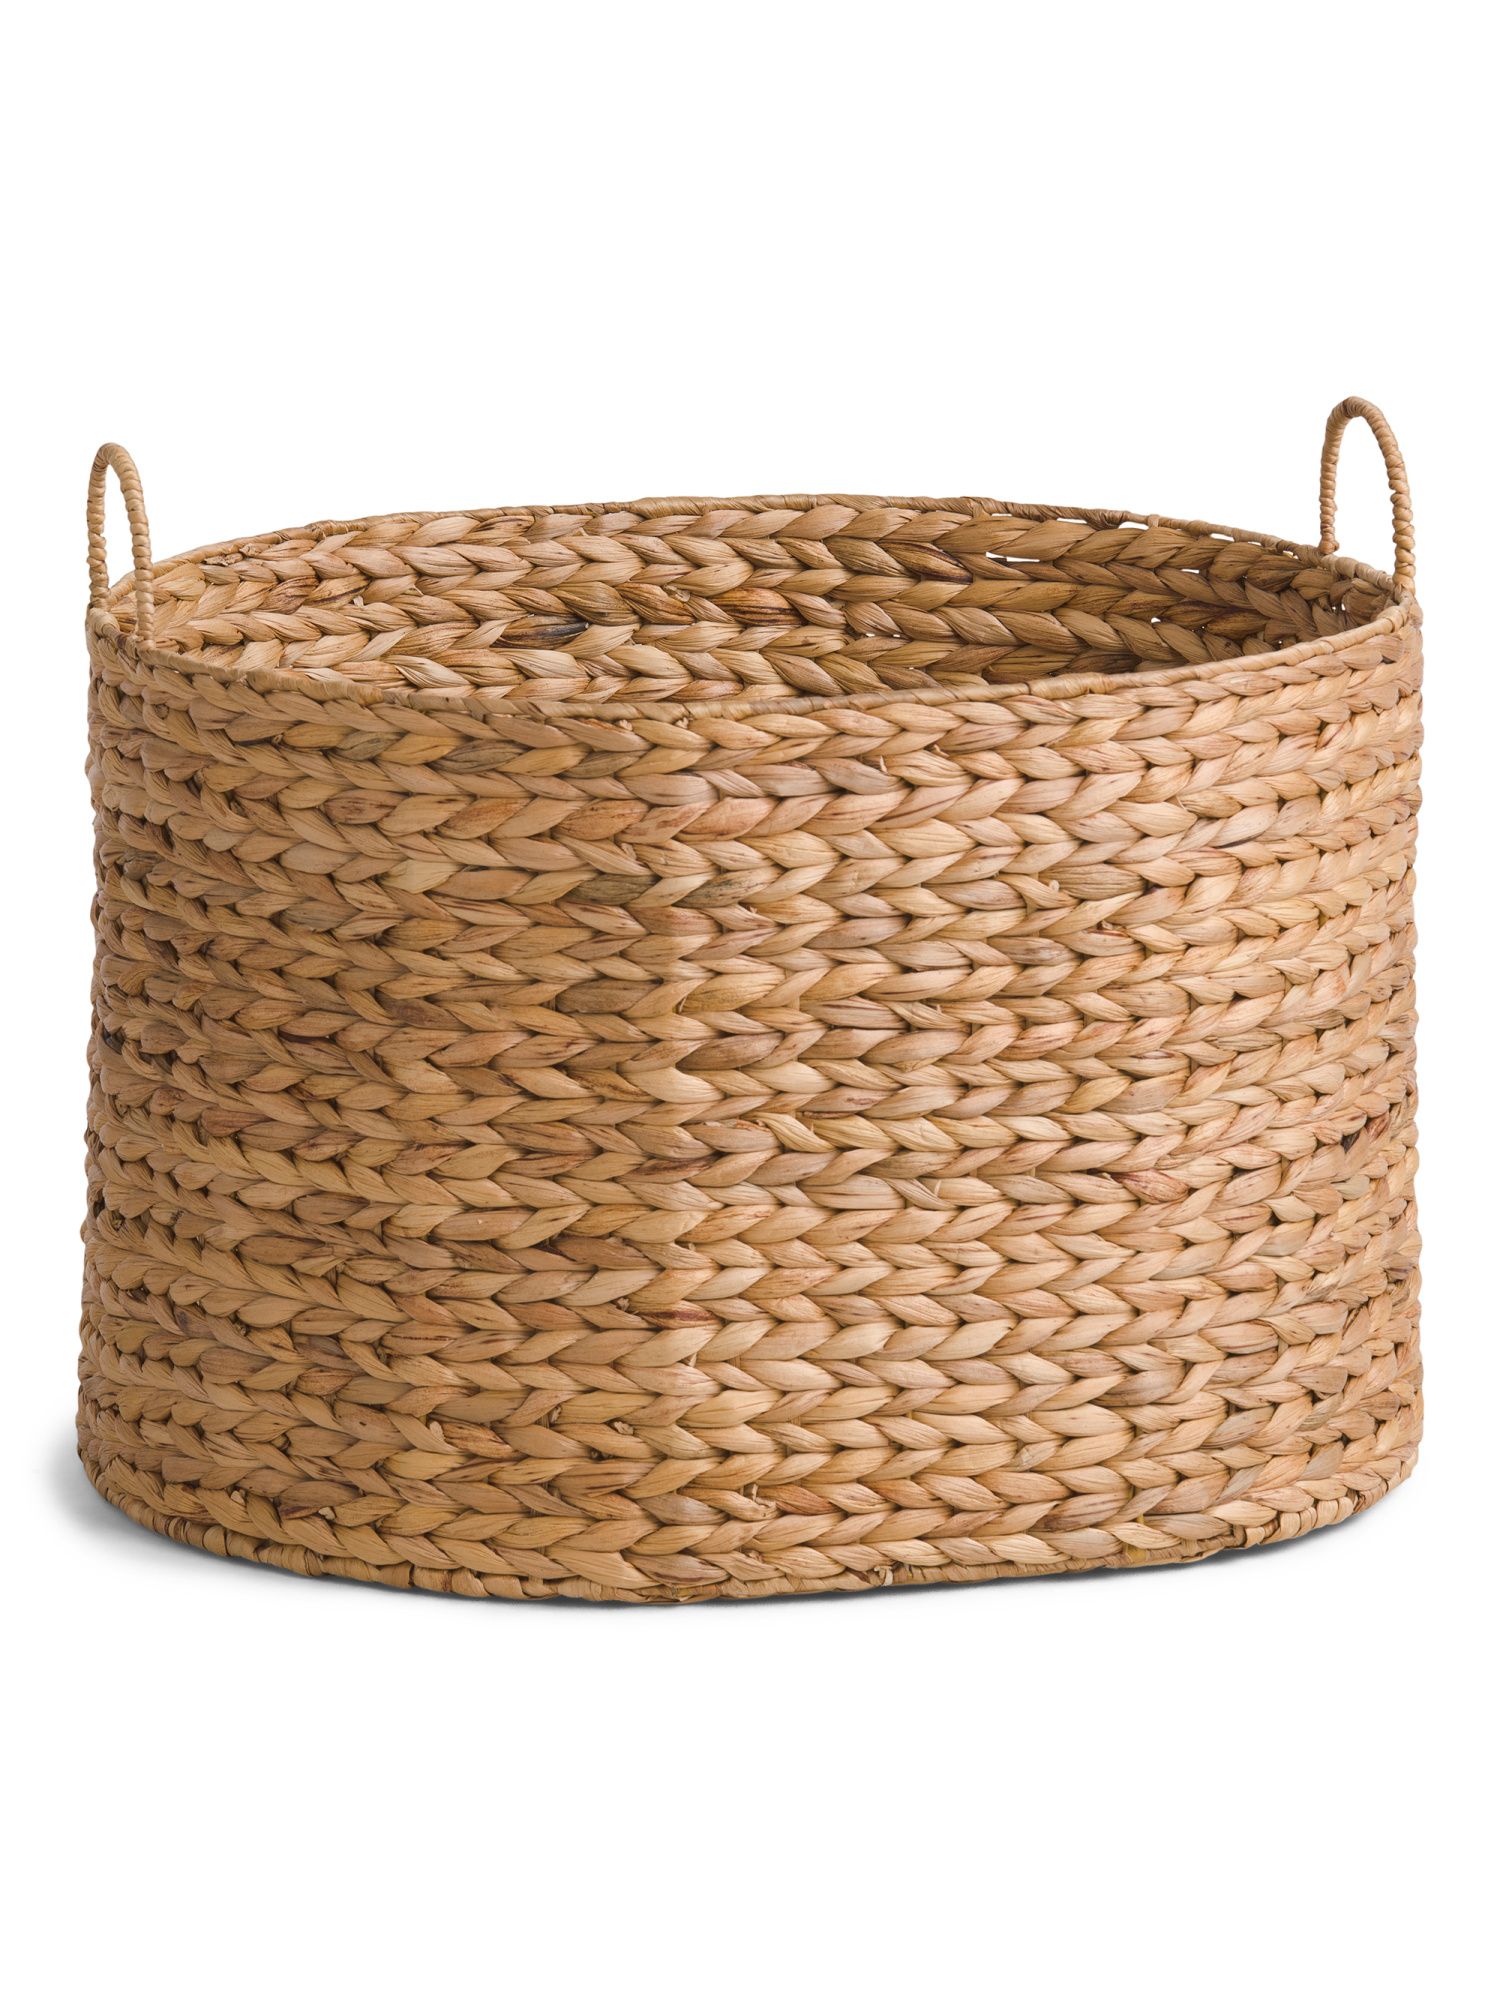 Hyacinth Storage Basket With Handles | TJ Maxx